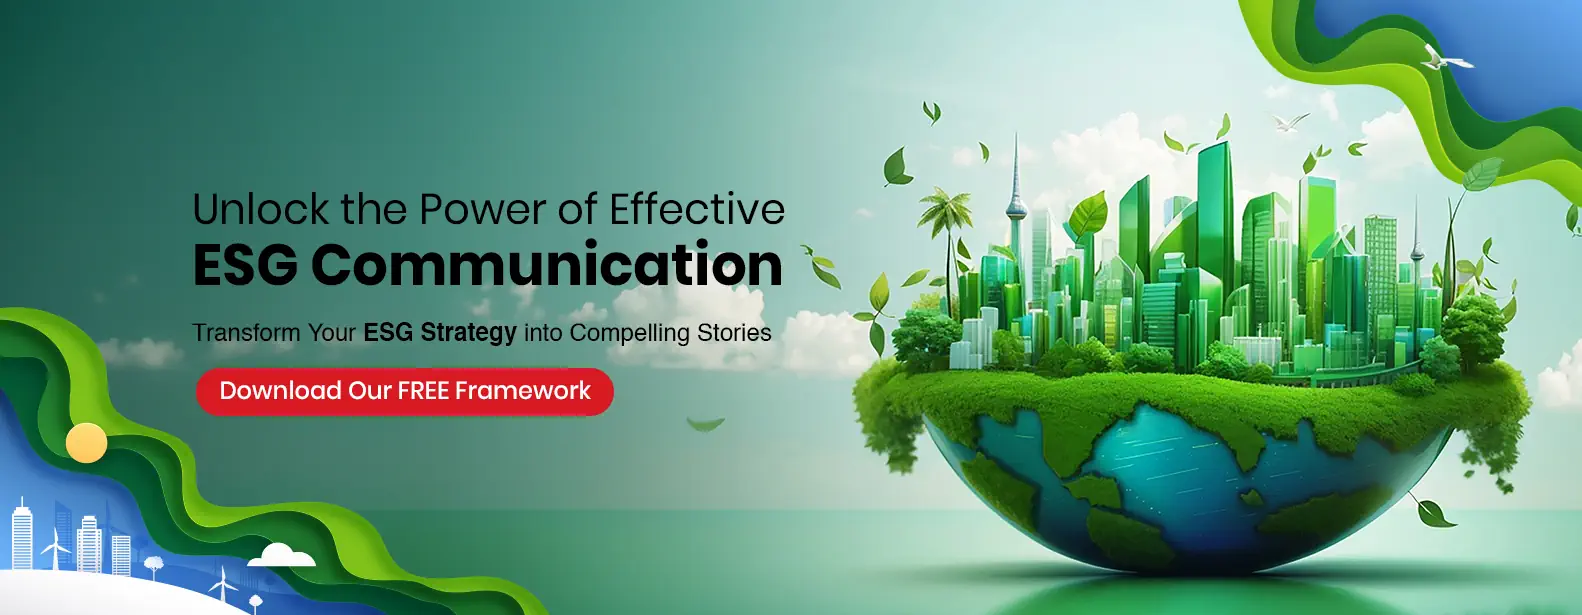 Unlock the Power of Effective ESG Communication